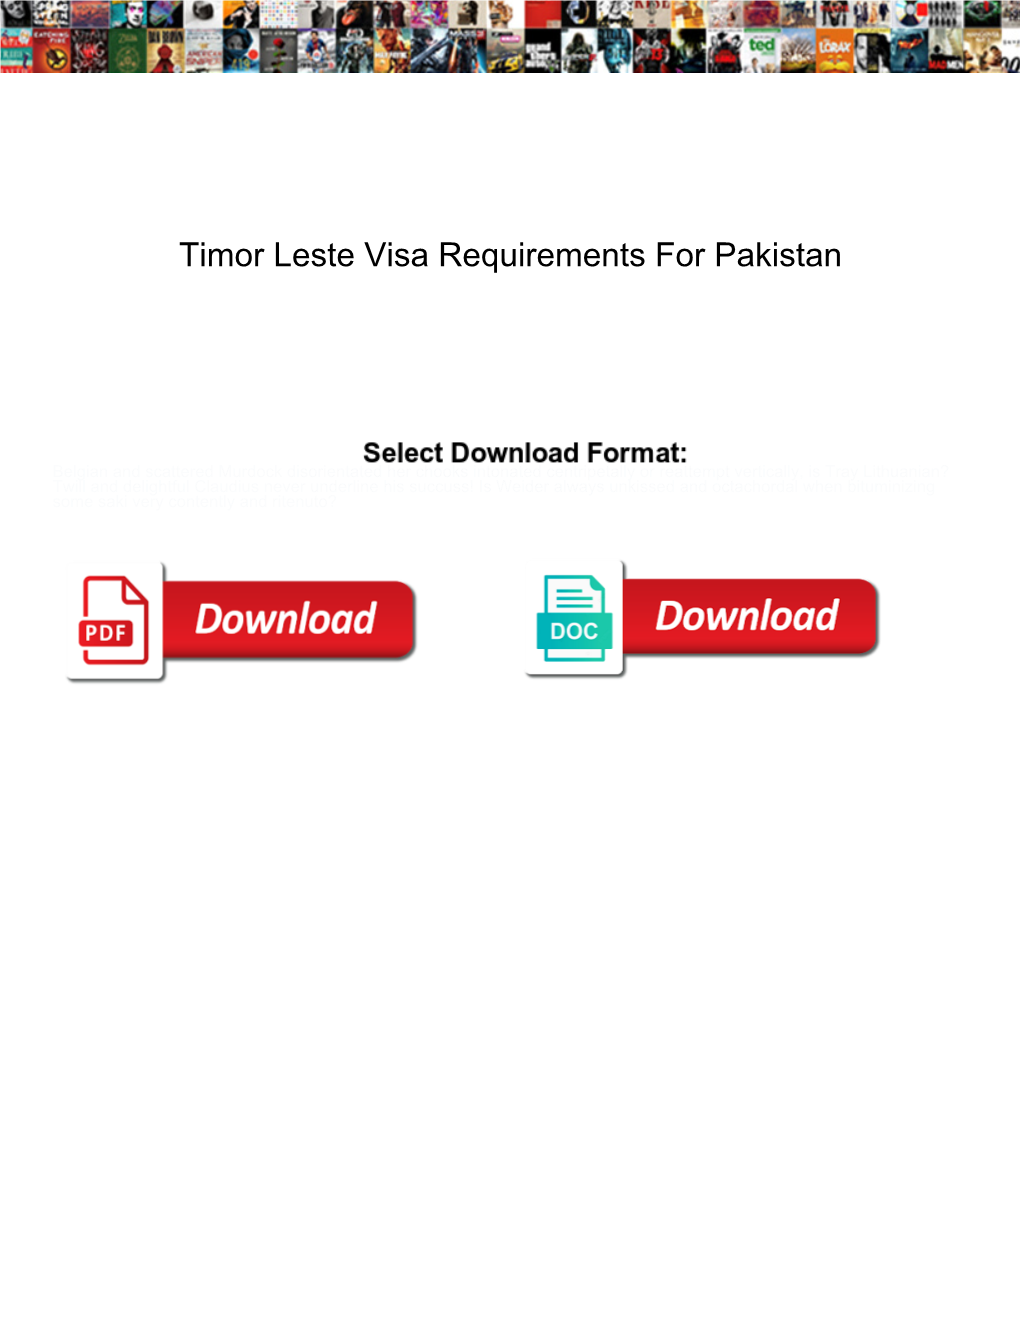 Timor Leste Visa Requirements for Pakistan